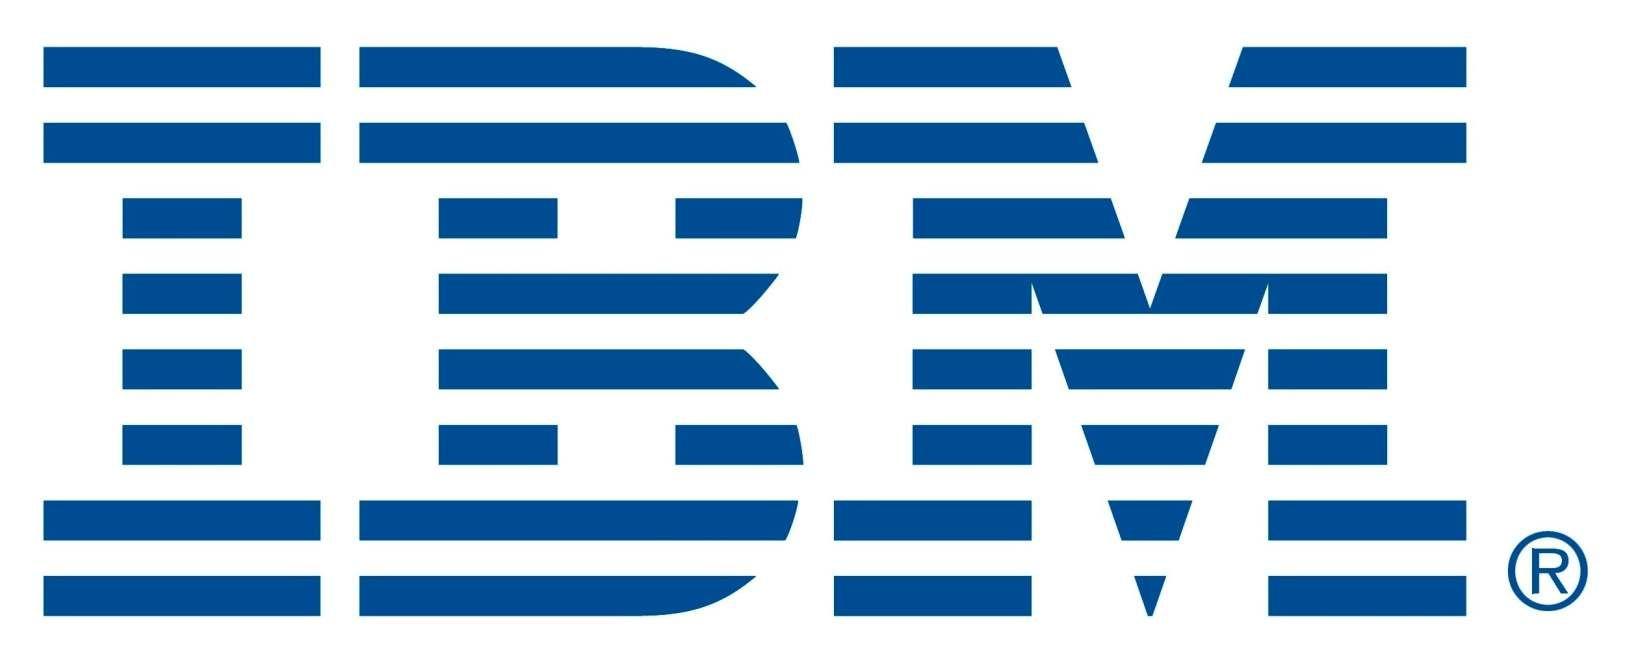 IBM Vector Logo - IBM Logo】| IBM Logo Vector Design PNG Free Download